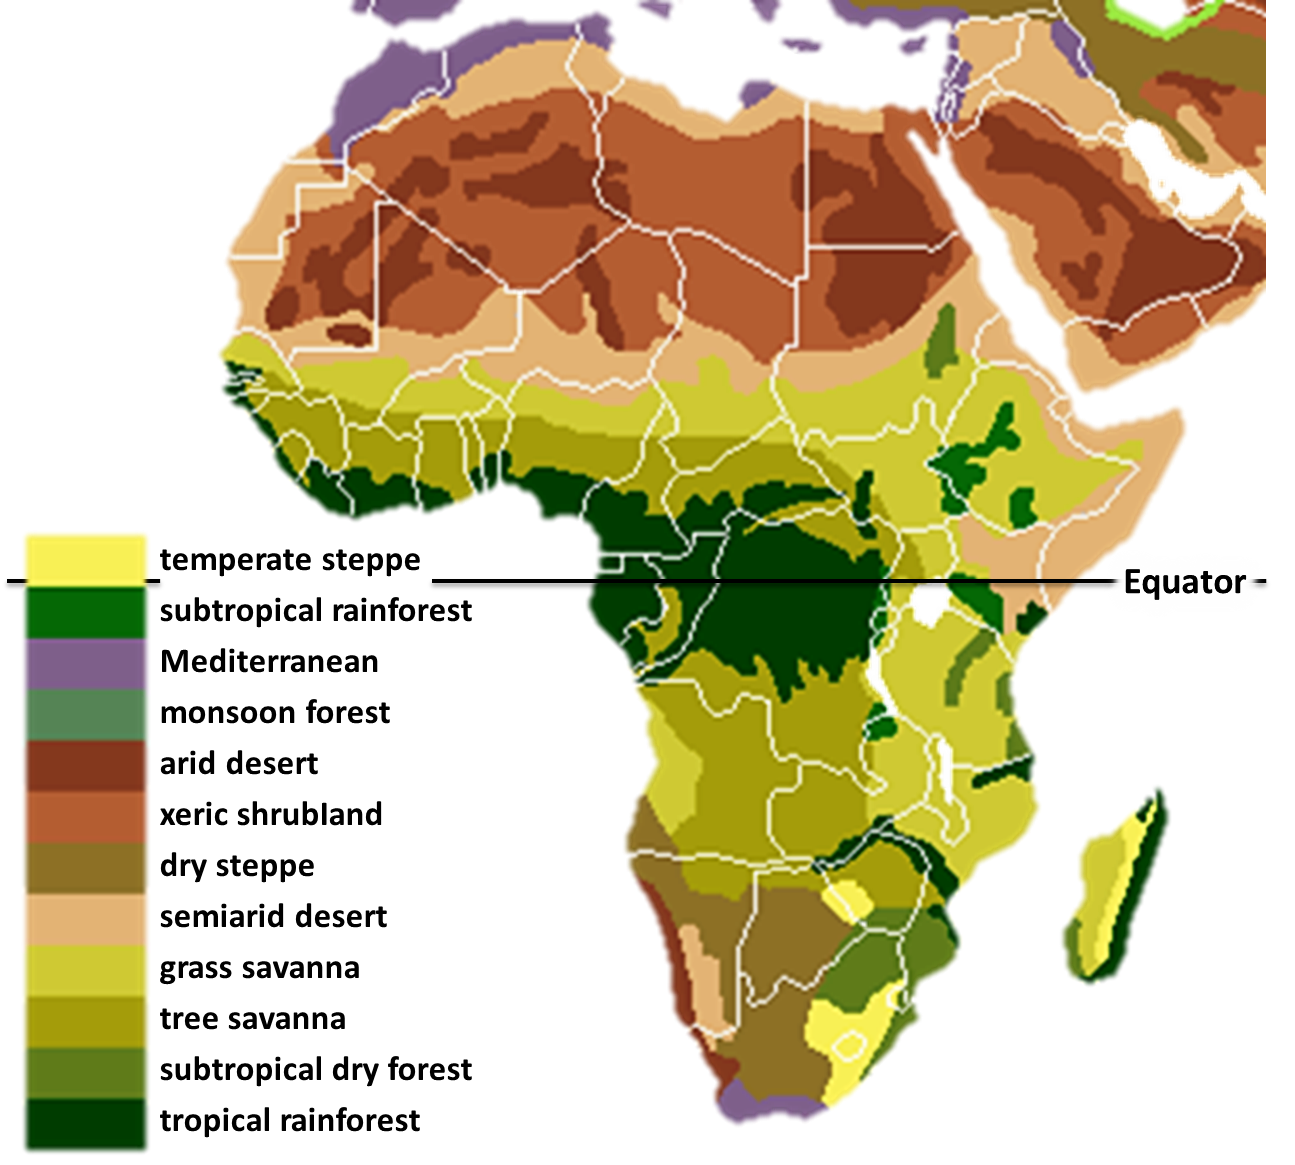 Äquator - Vegetationskarte von Afrika (c) wikimedia